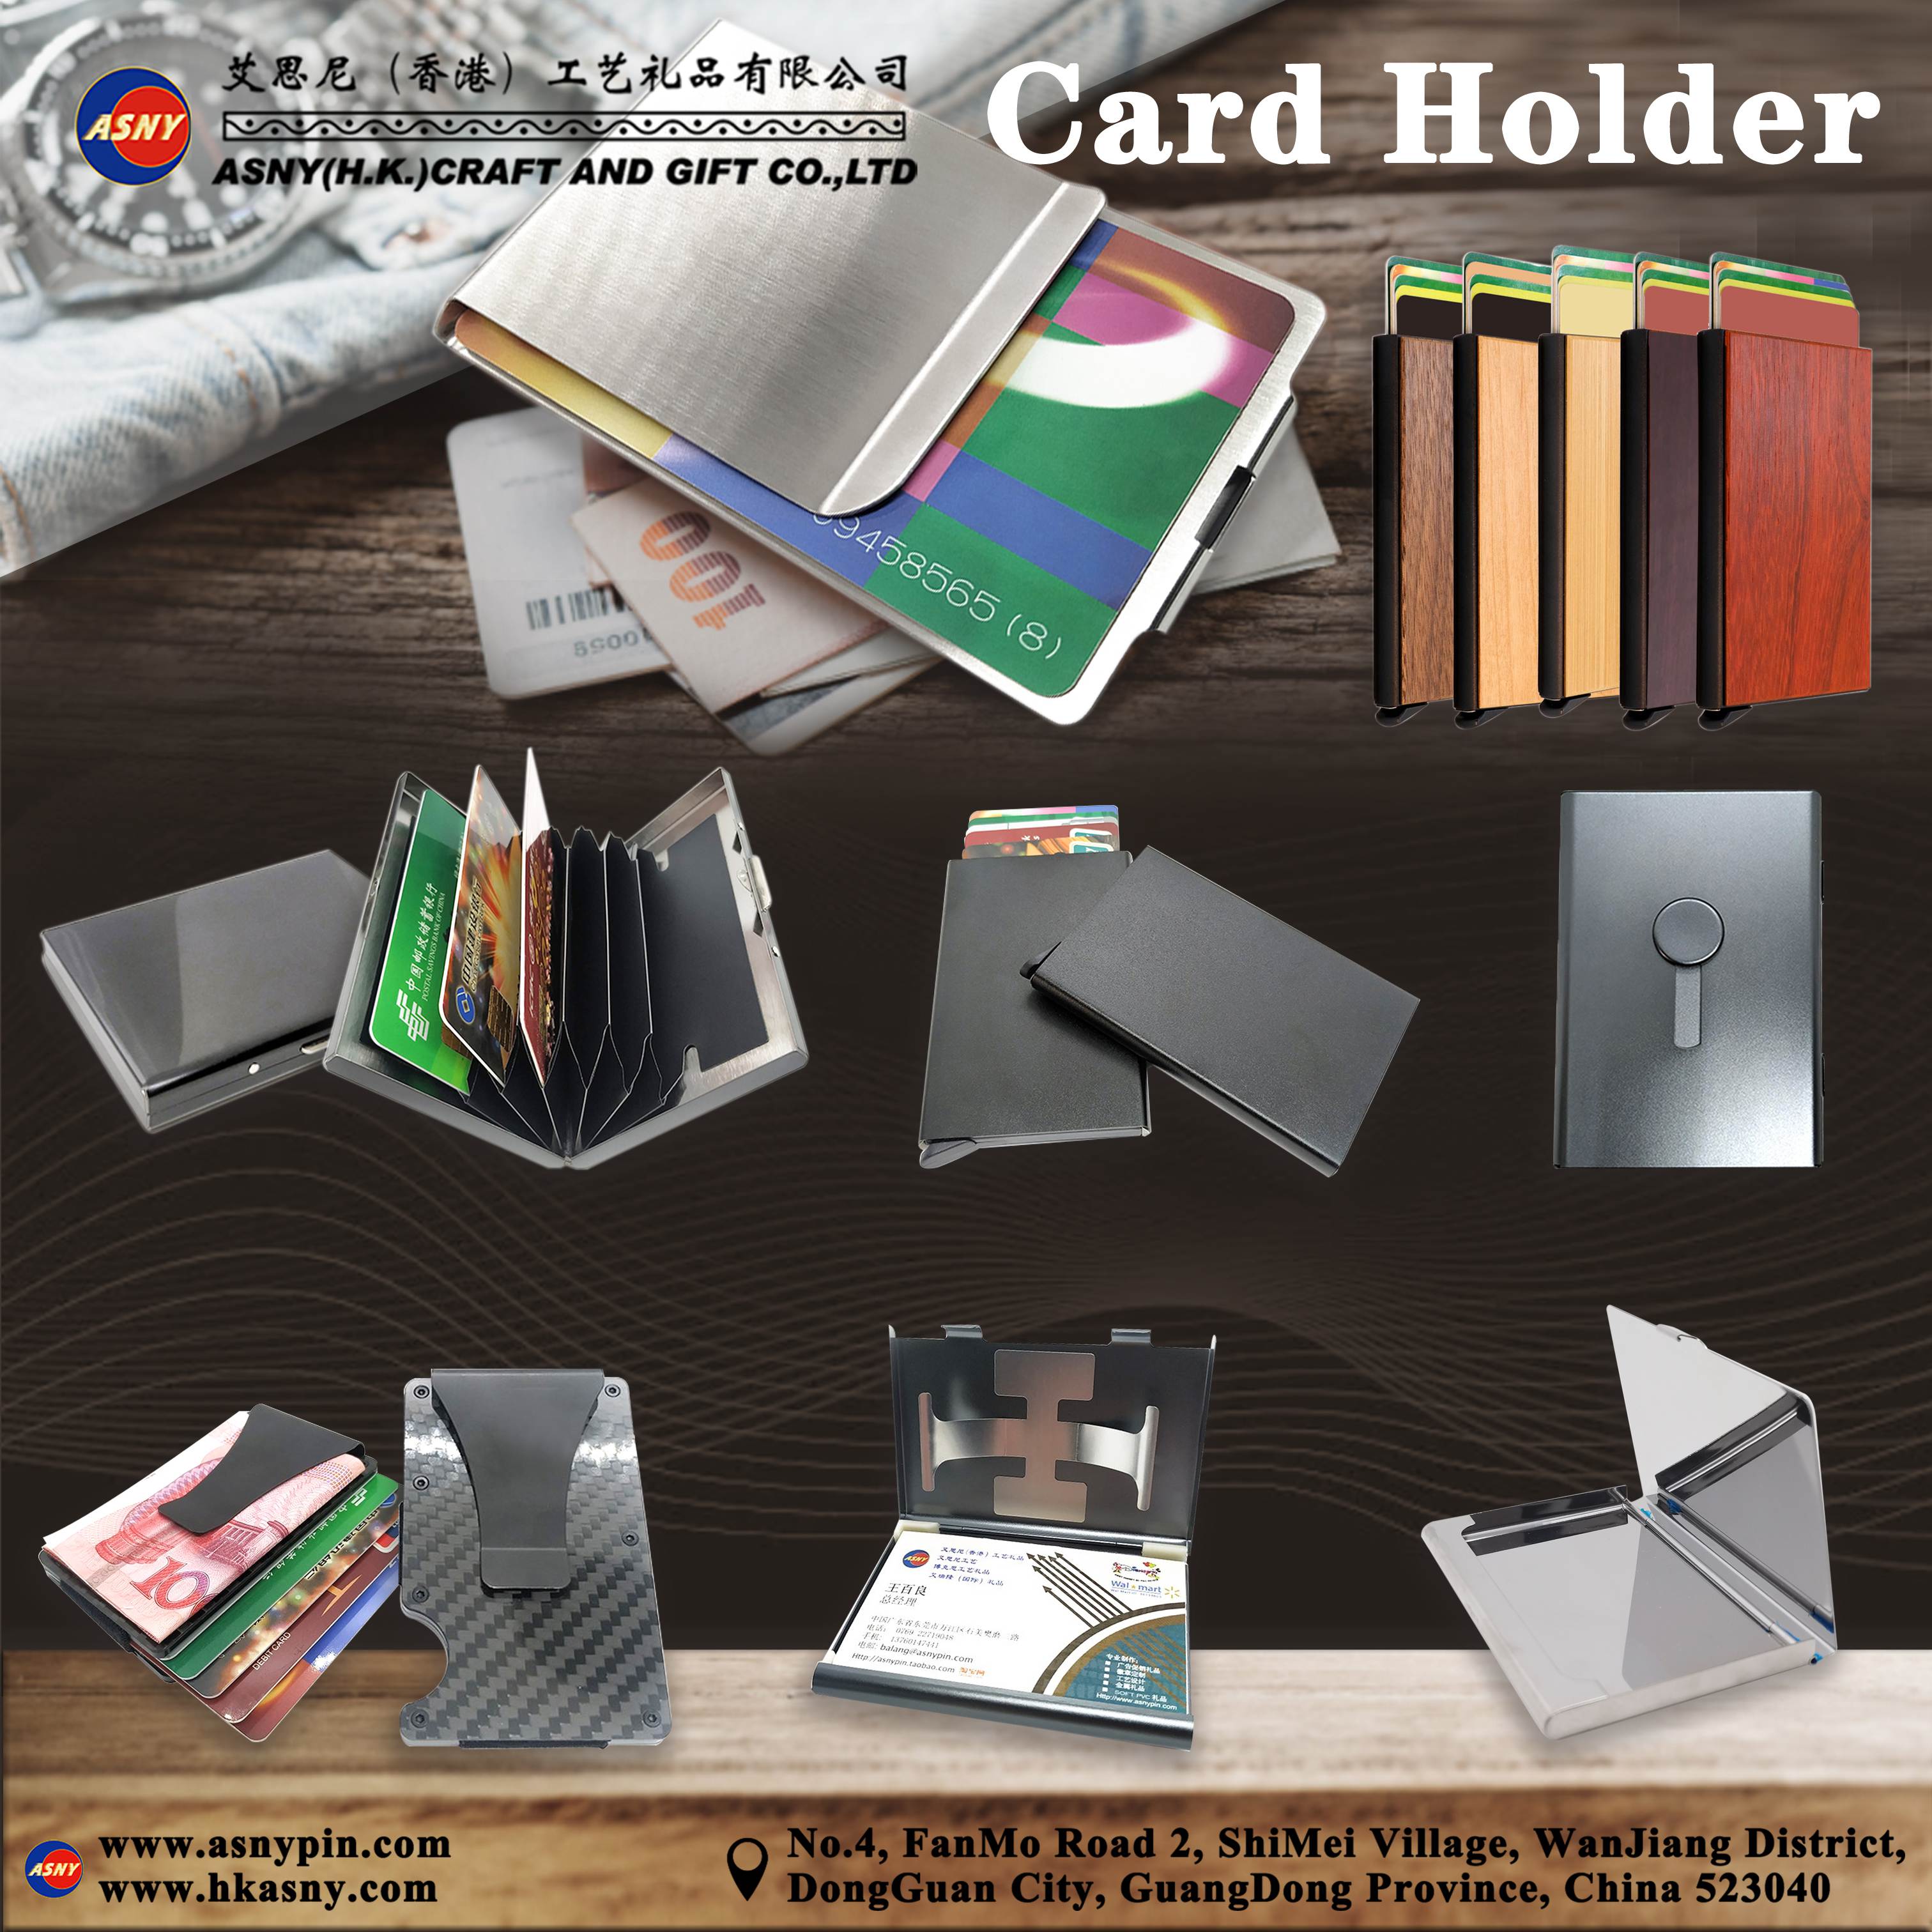 Catalog - Card Holder Design/Production/Make/Supply/Factory